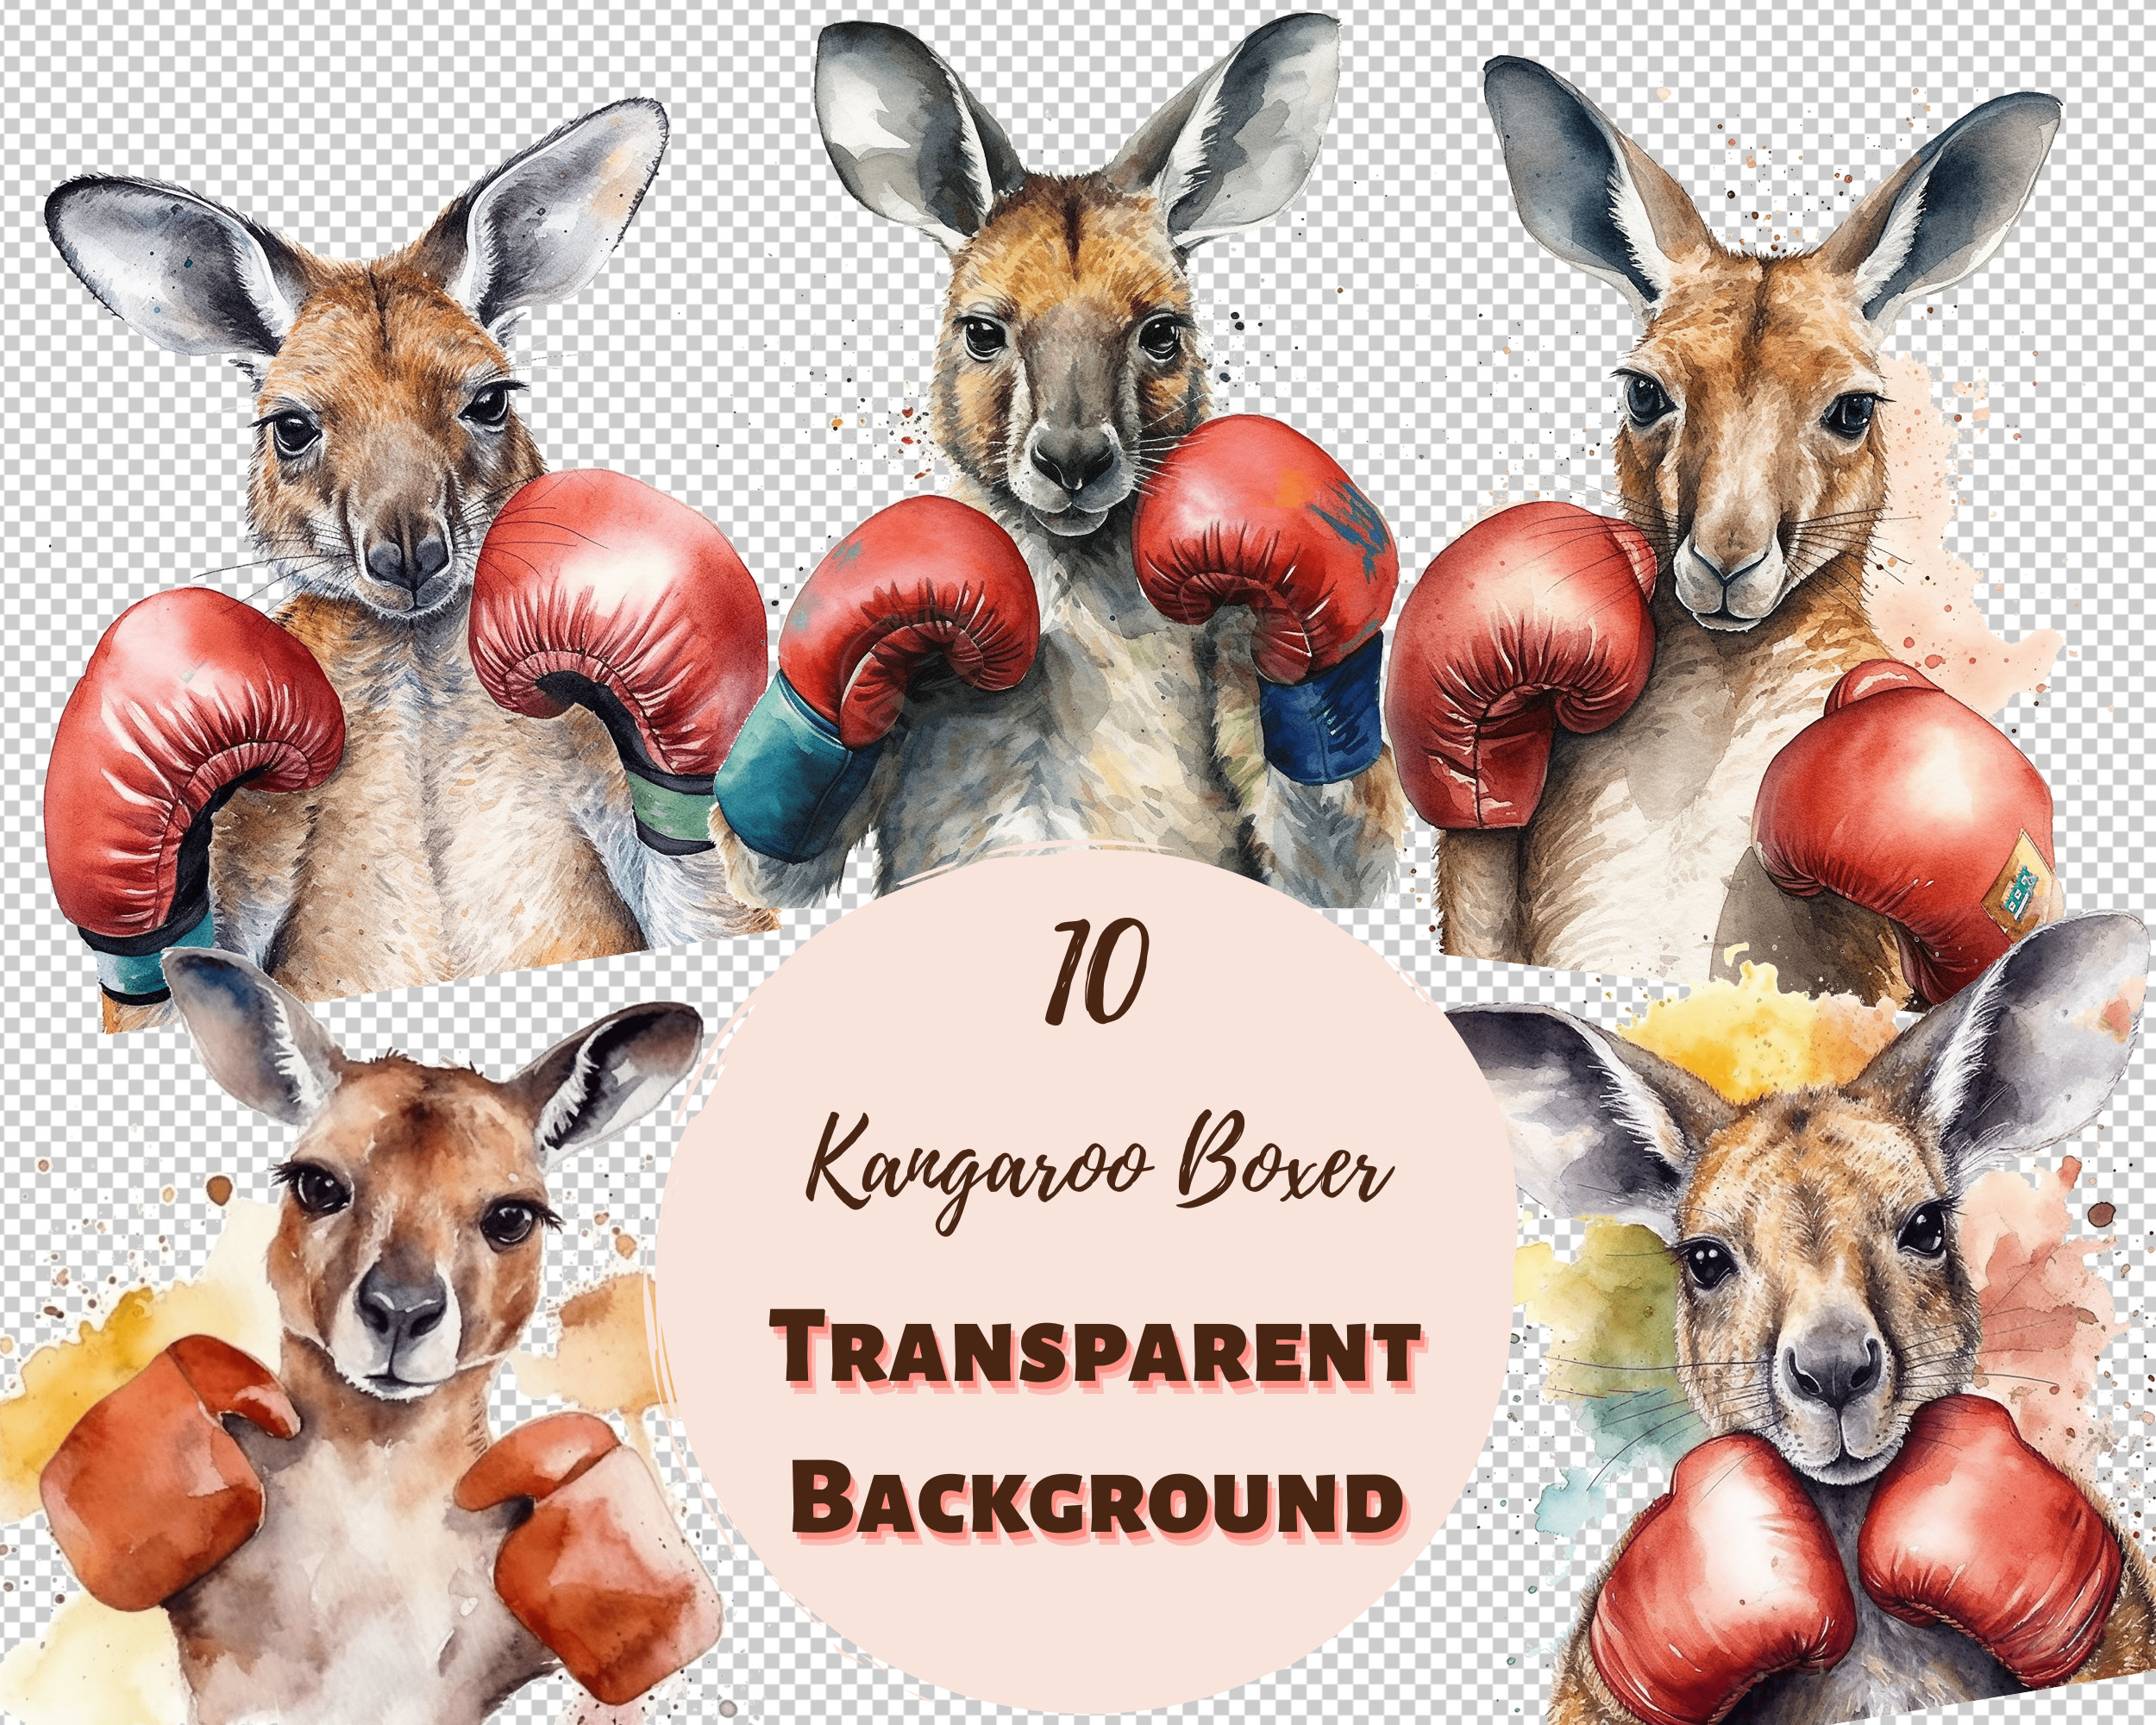 Kangaroo Glass Sculpture, Blown Glass Animal, Boxing Kangaroo Art